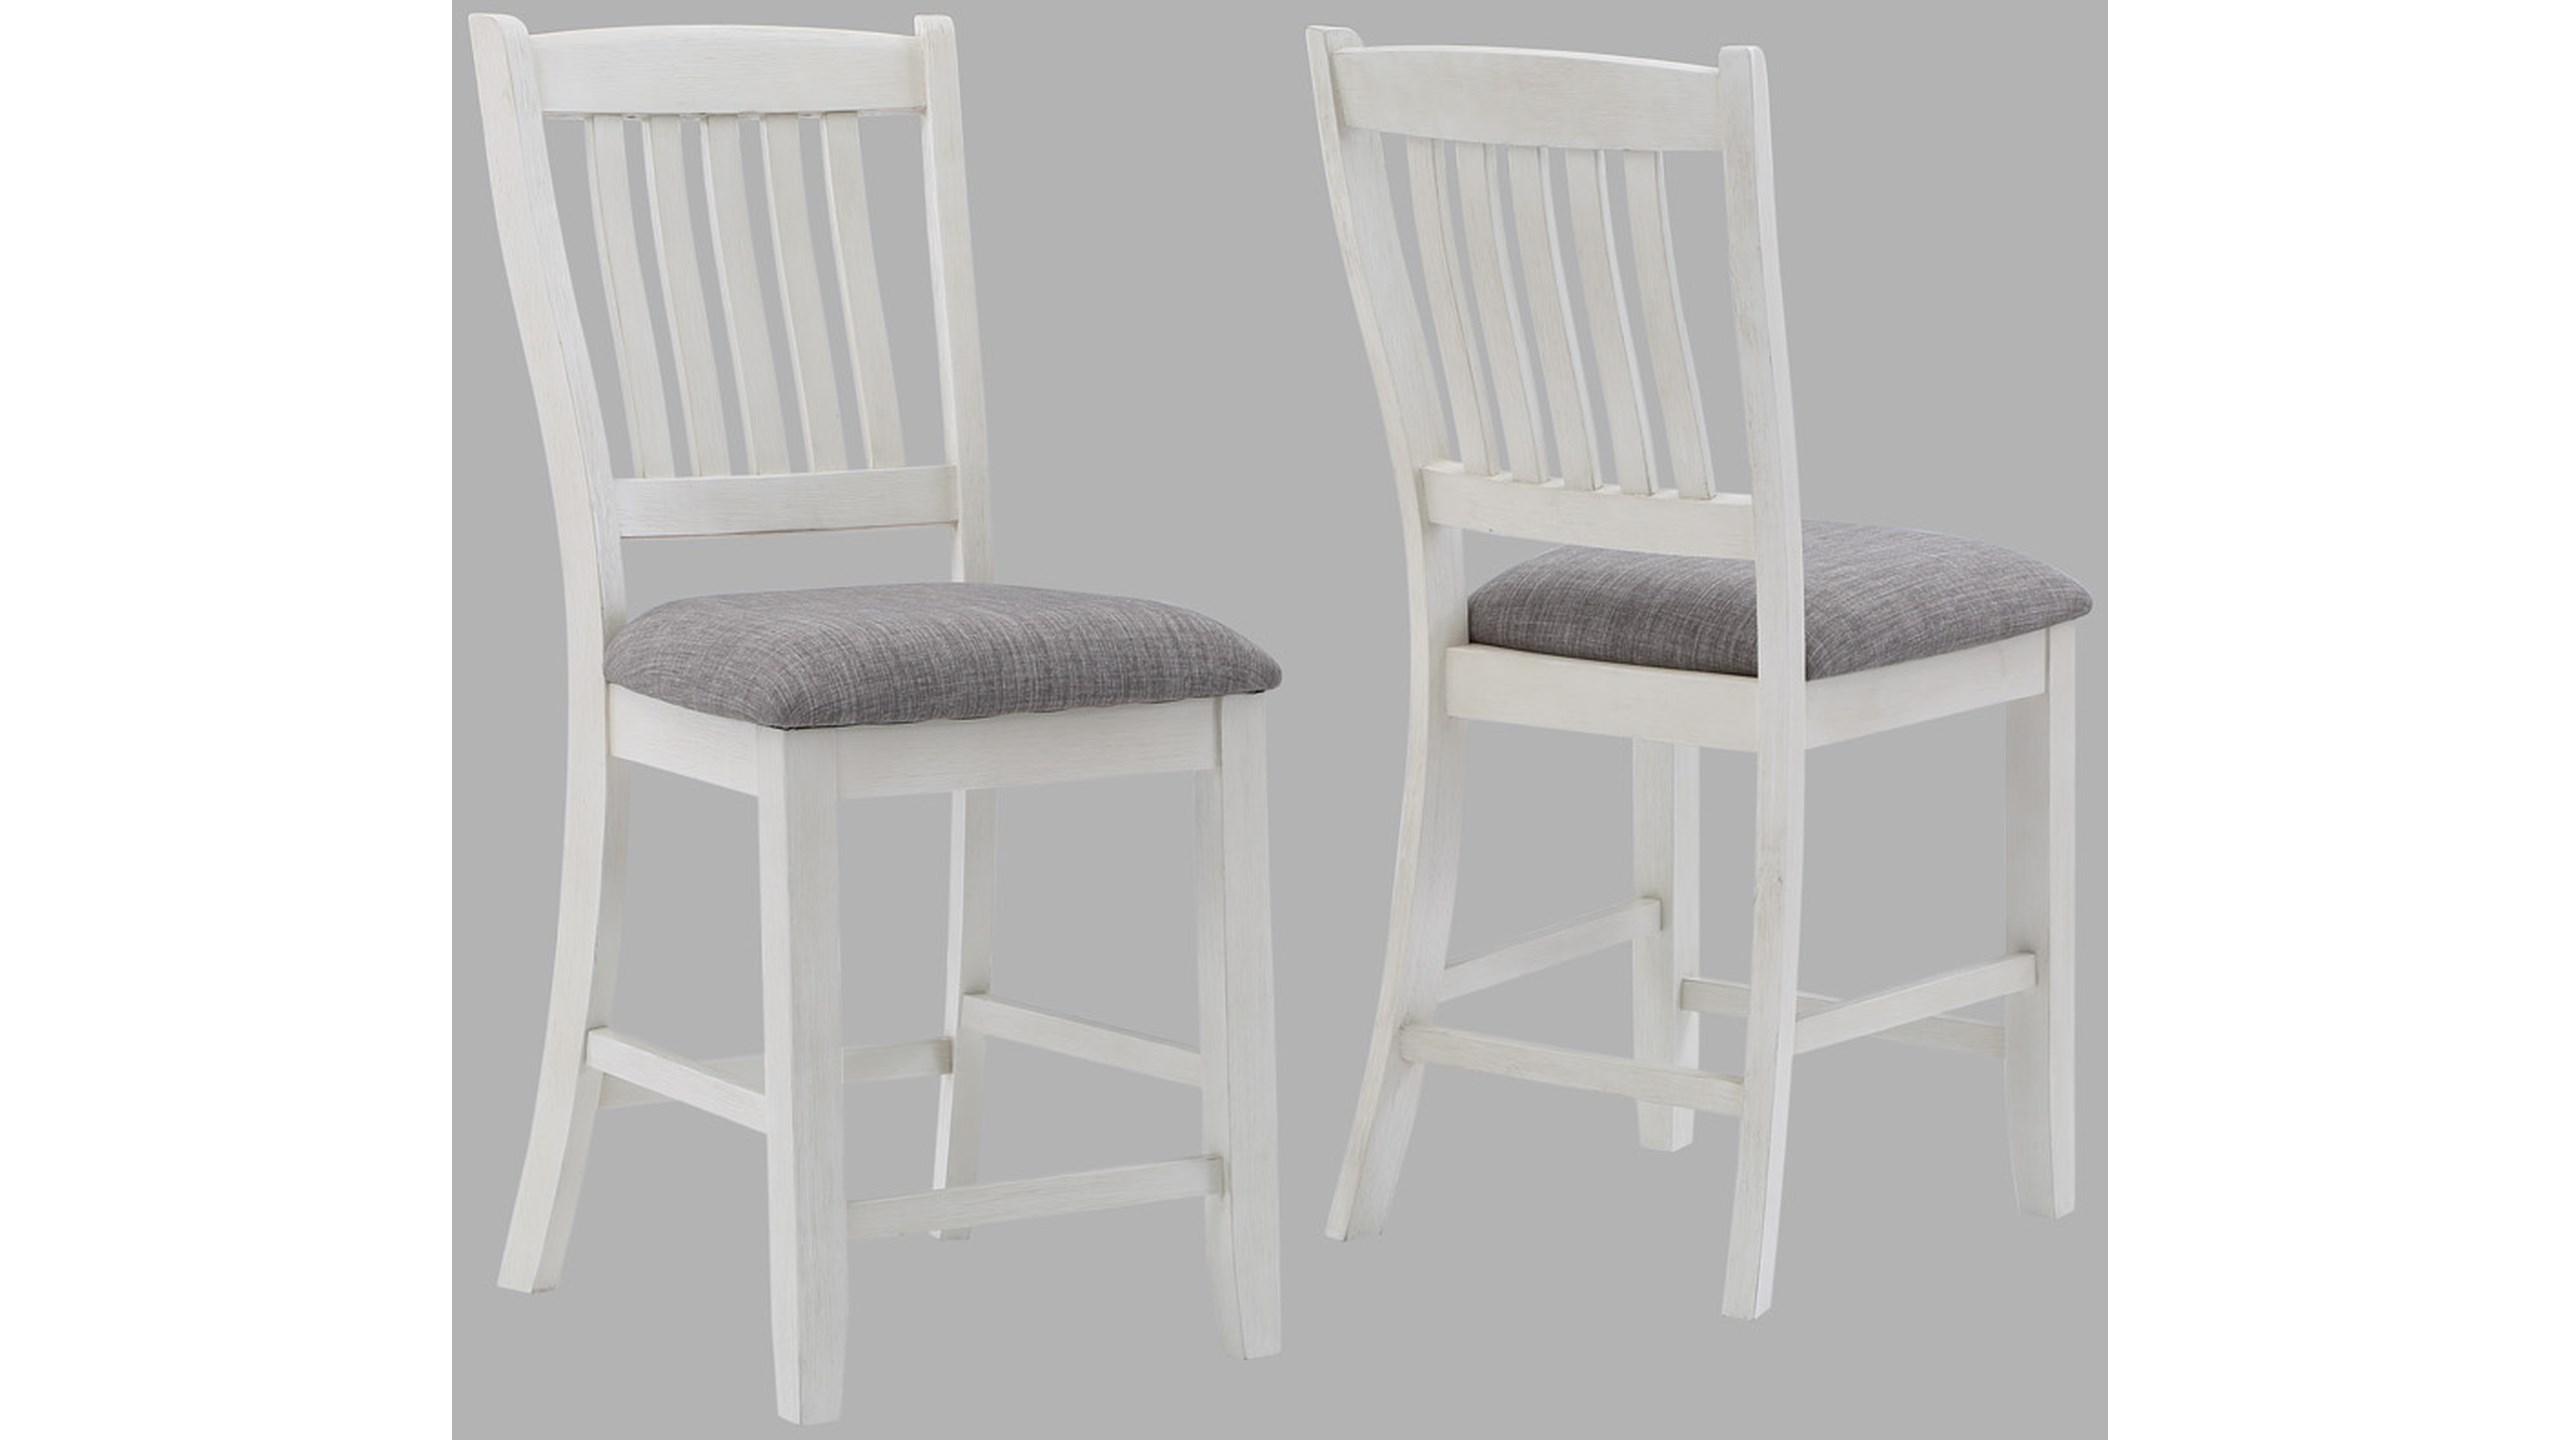 Traditional, Farmhouse Counter Chair Set Jorie 2742CG-S-24-2pcs in White Linen